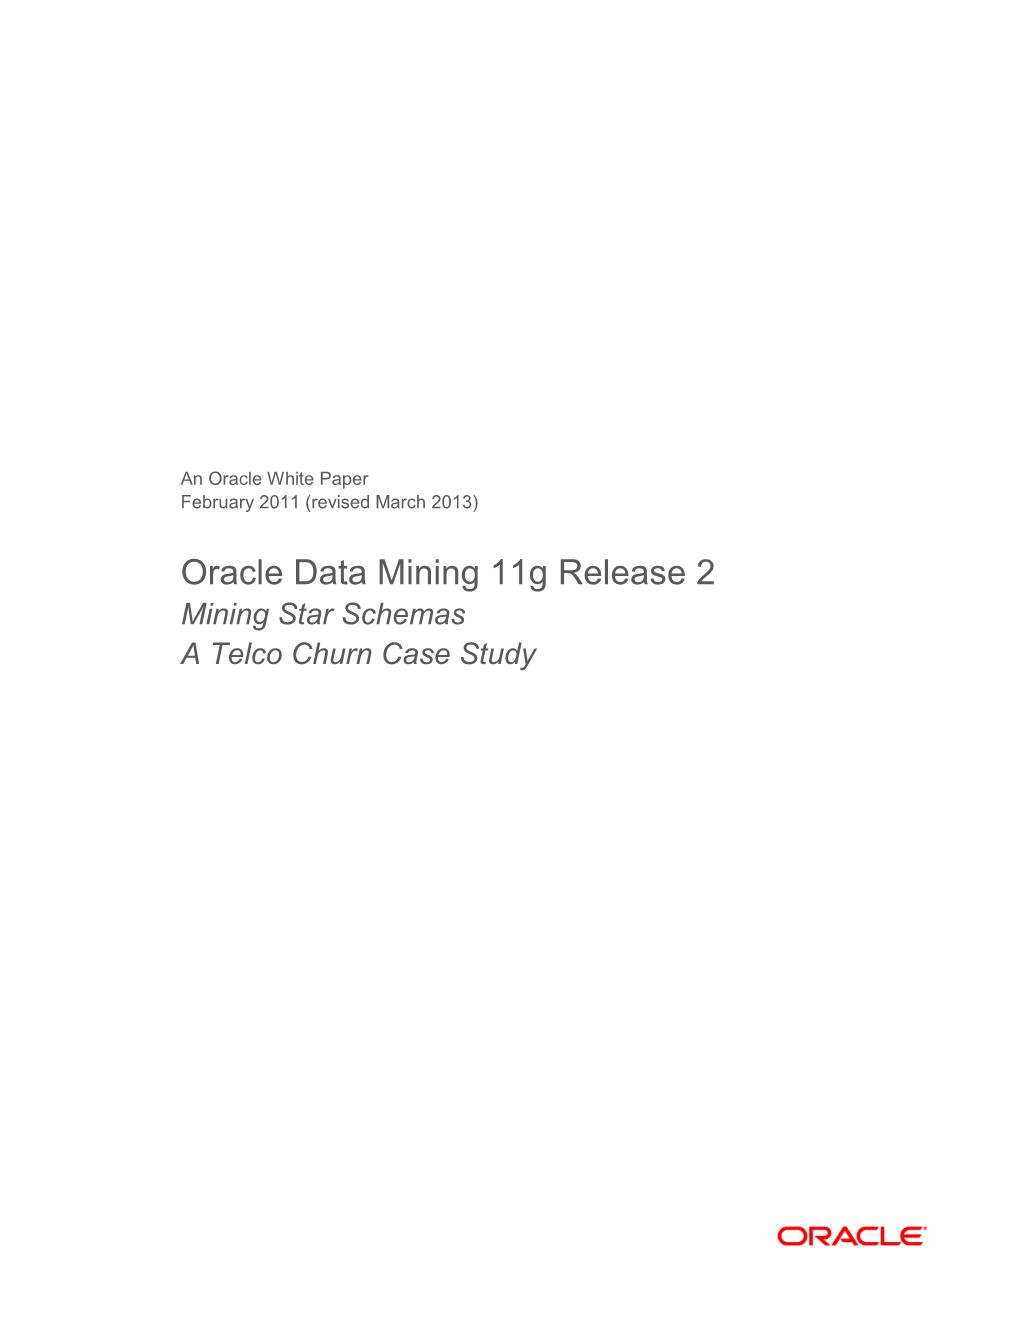 Oracle Data Mining 11G Release 2 Mining Star Schemas a Telco Churn Case Study